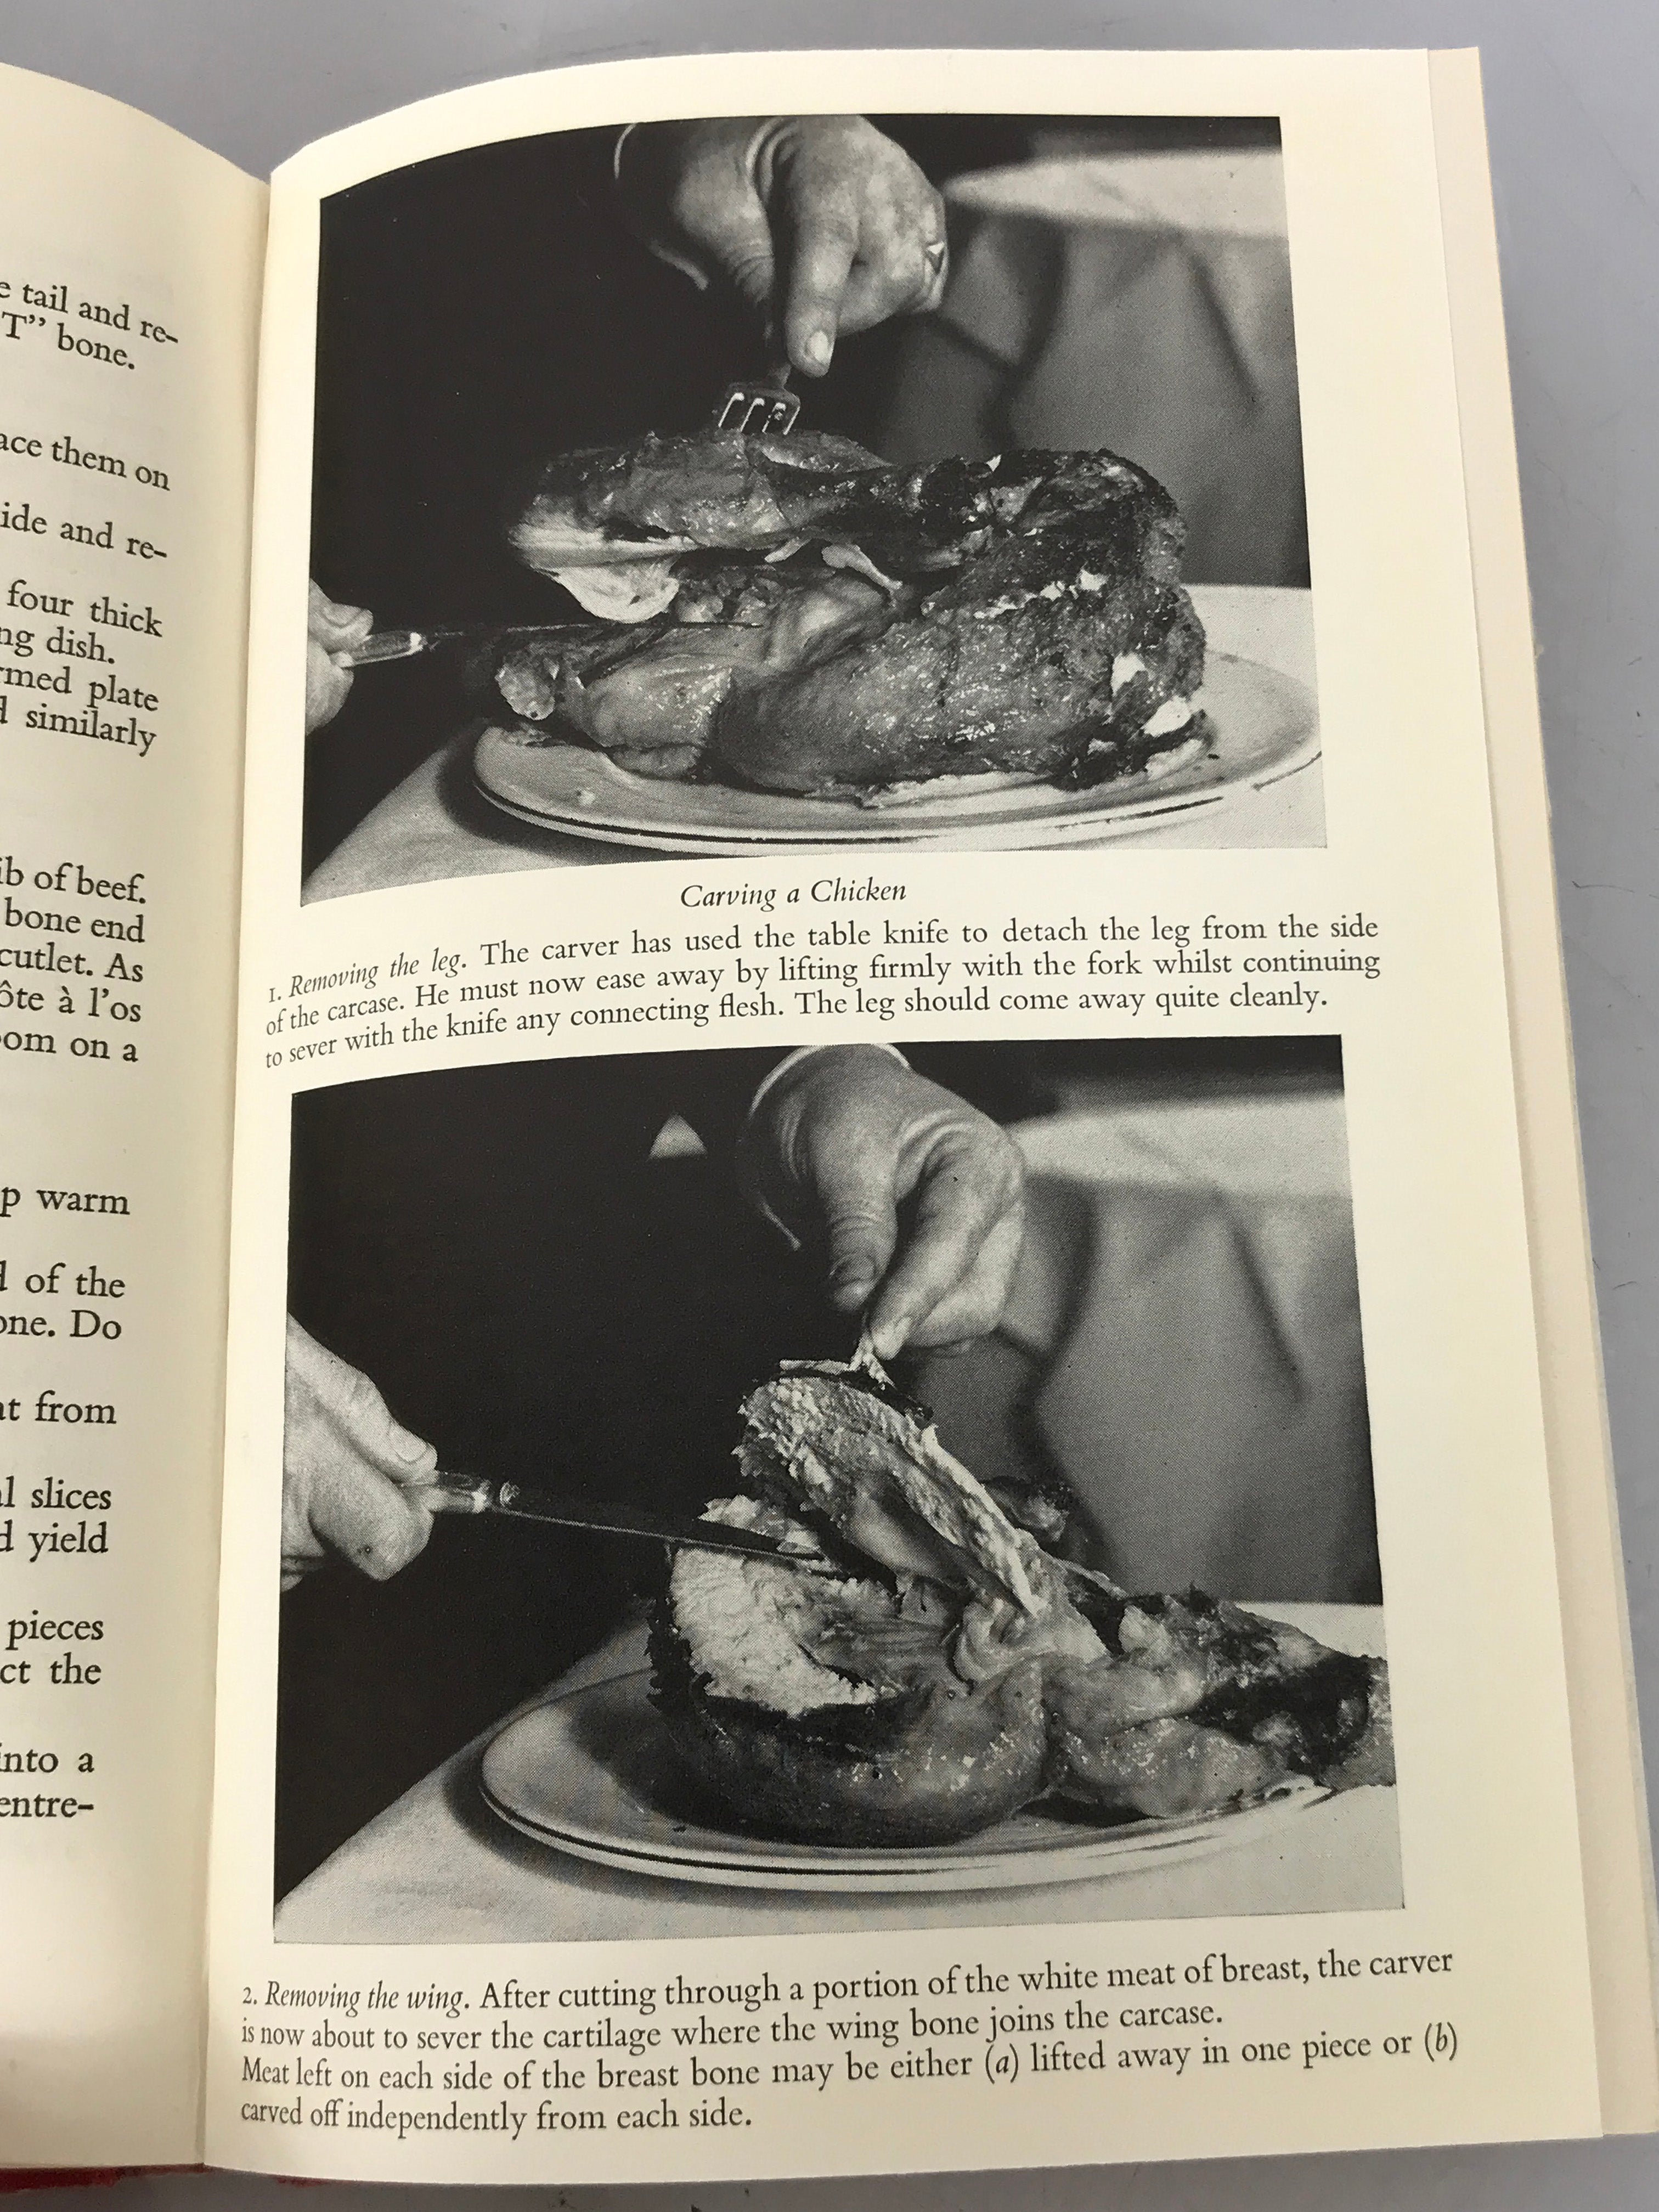 The Restaurateur's Guide to Gueridon & Lamp Cookery John Fuller 1965 HC DJ